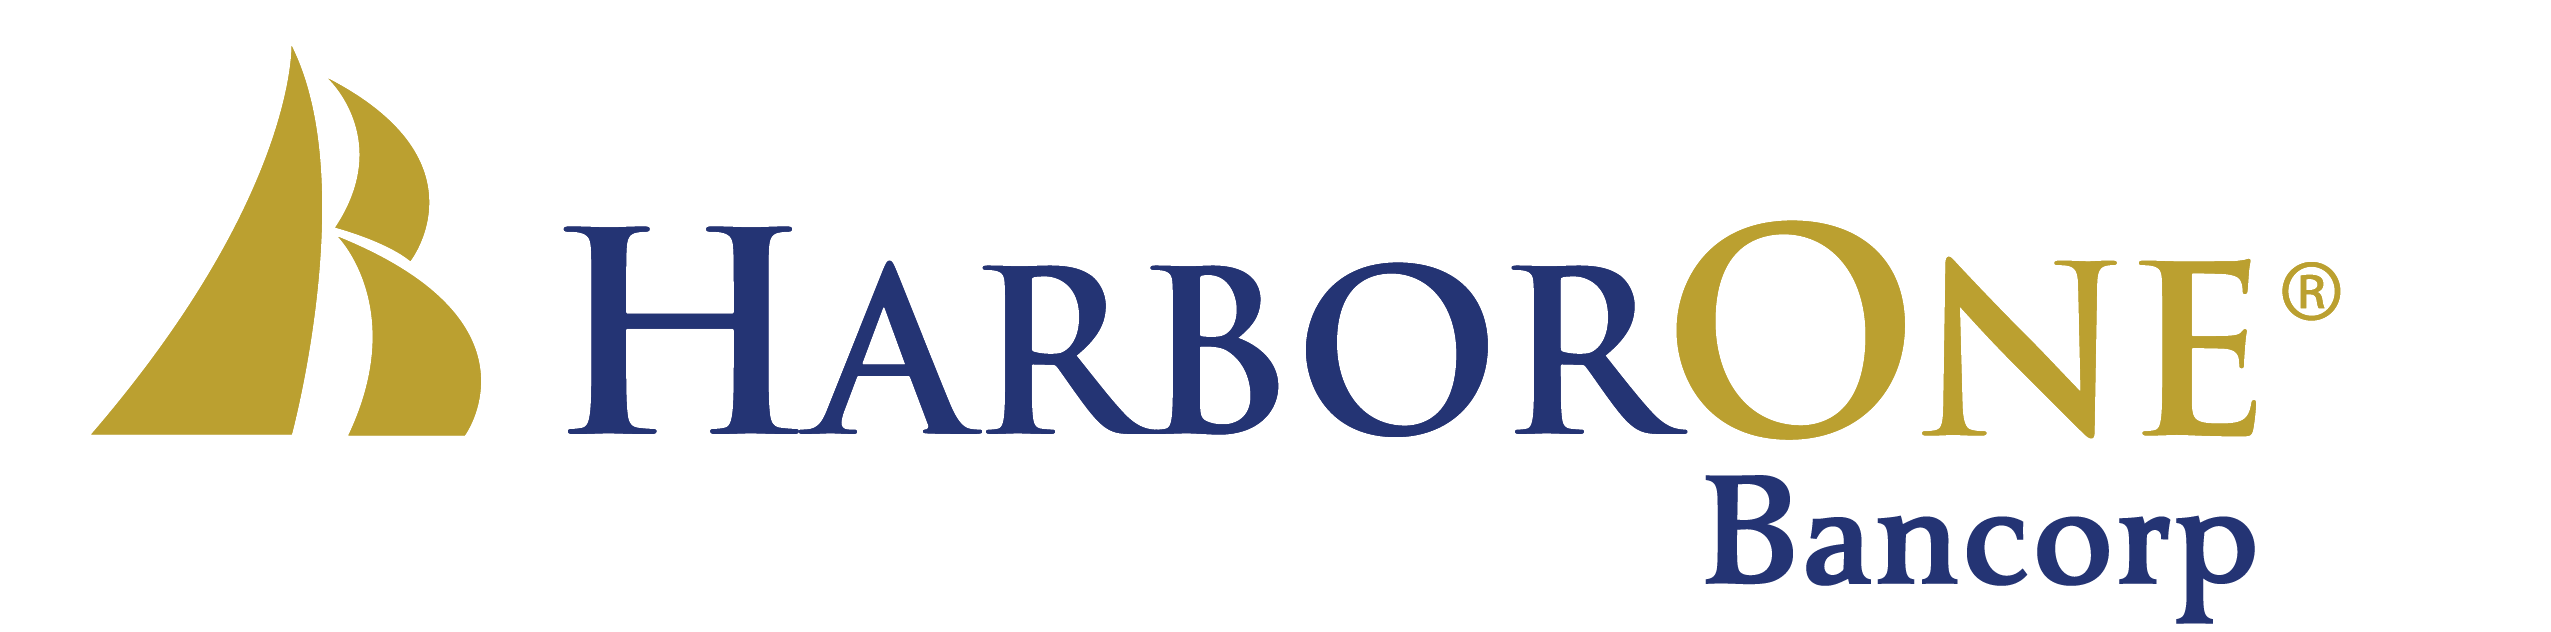 Bancorp Logo - HarborOne Bank - Corporate Profile